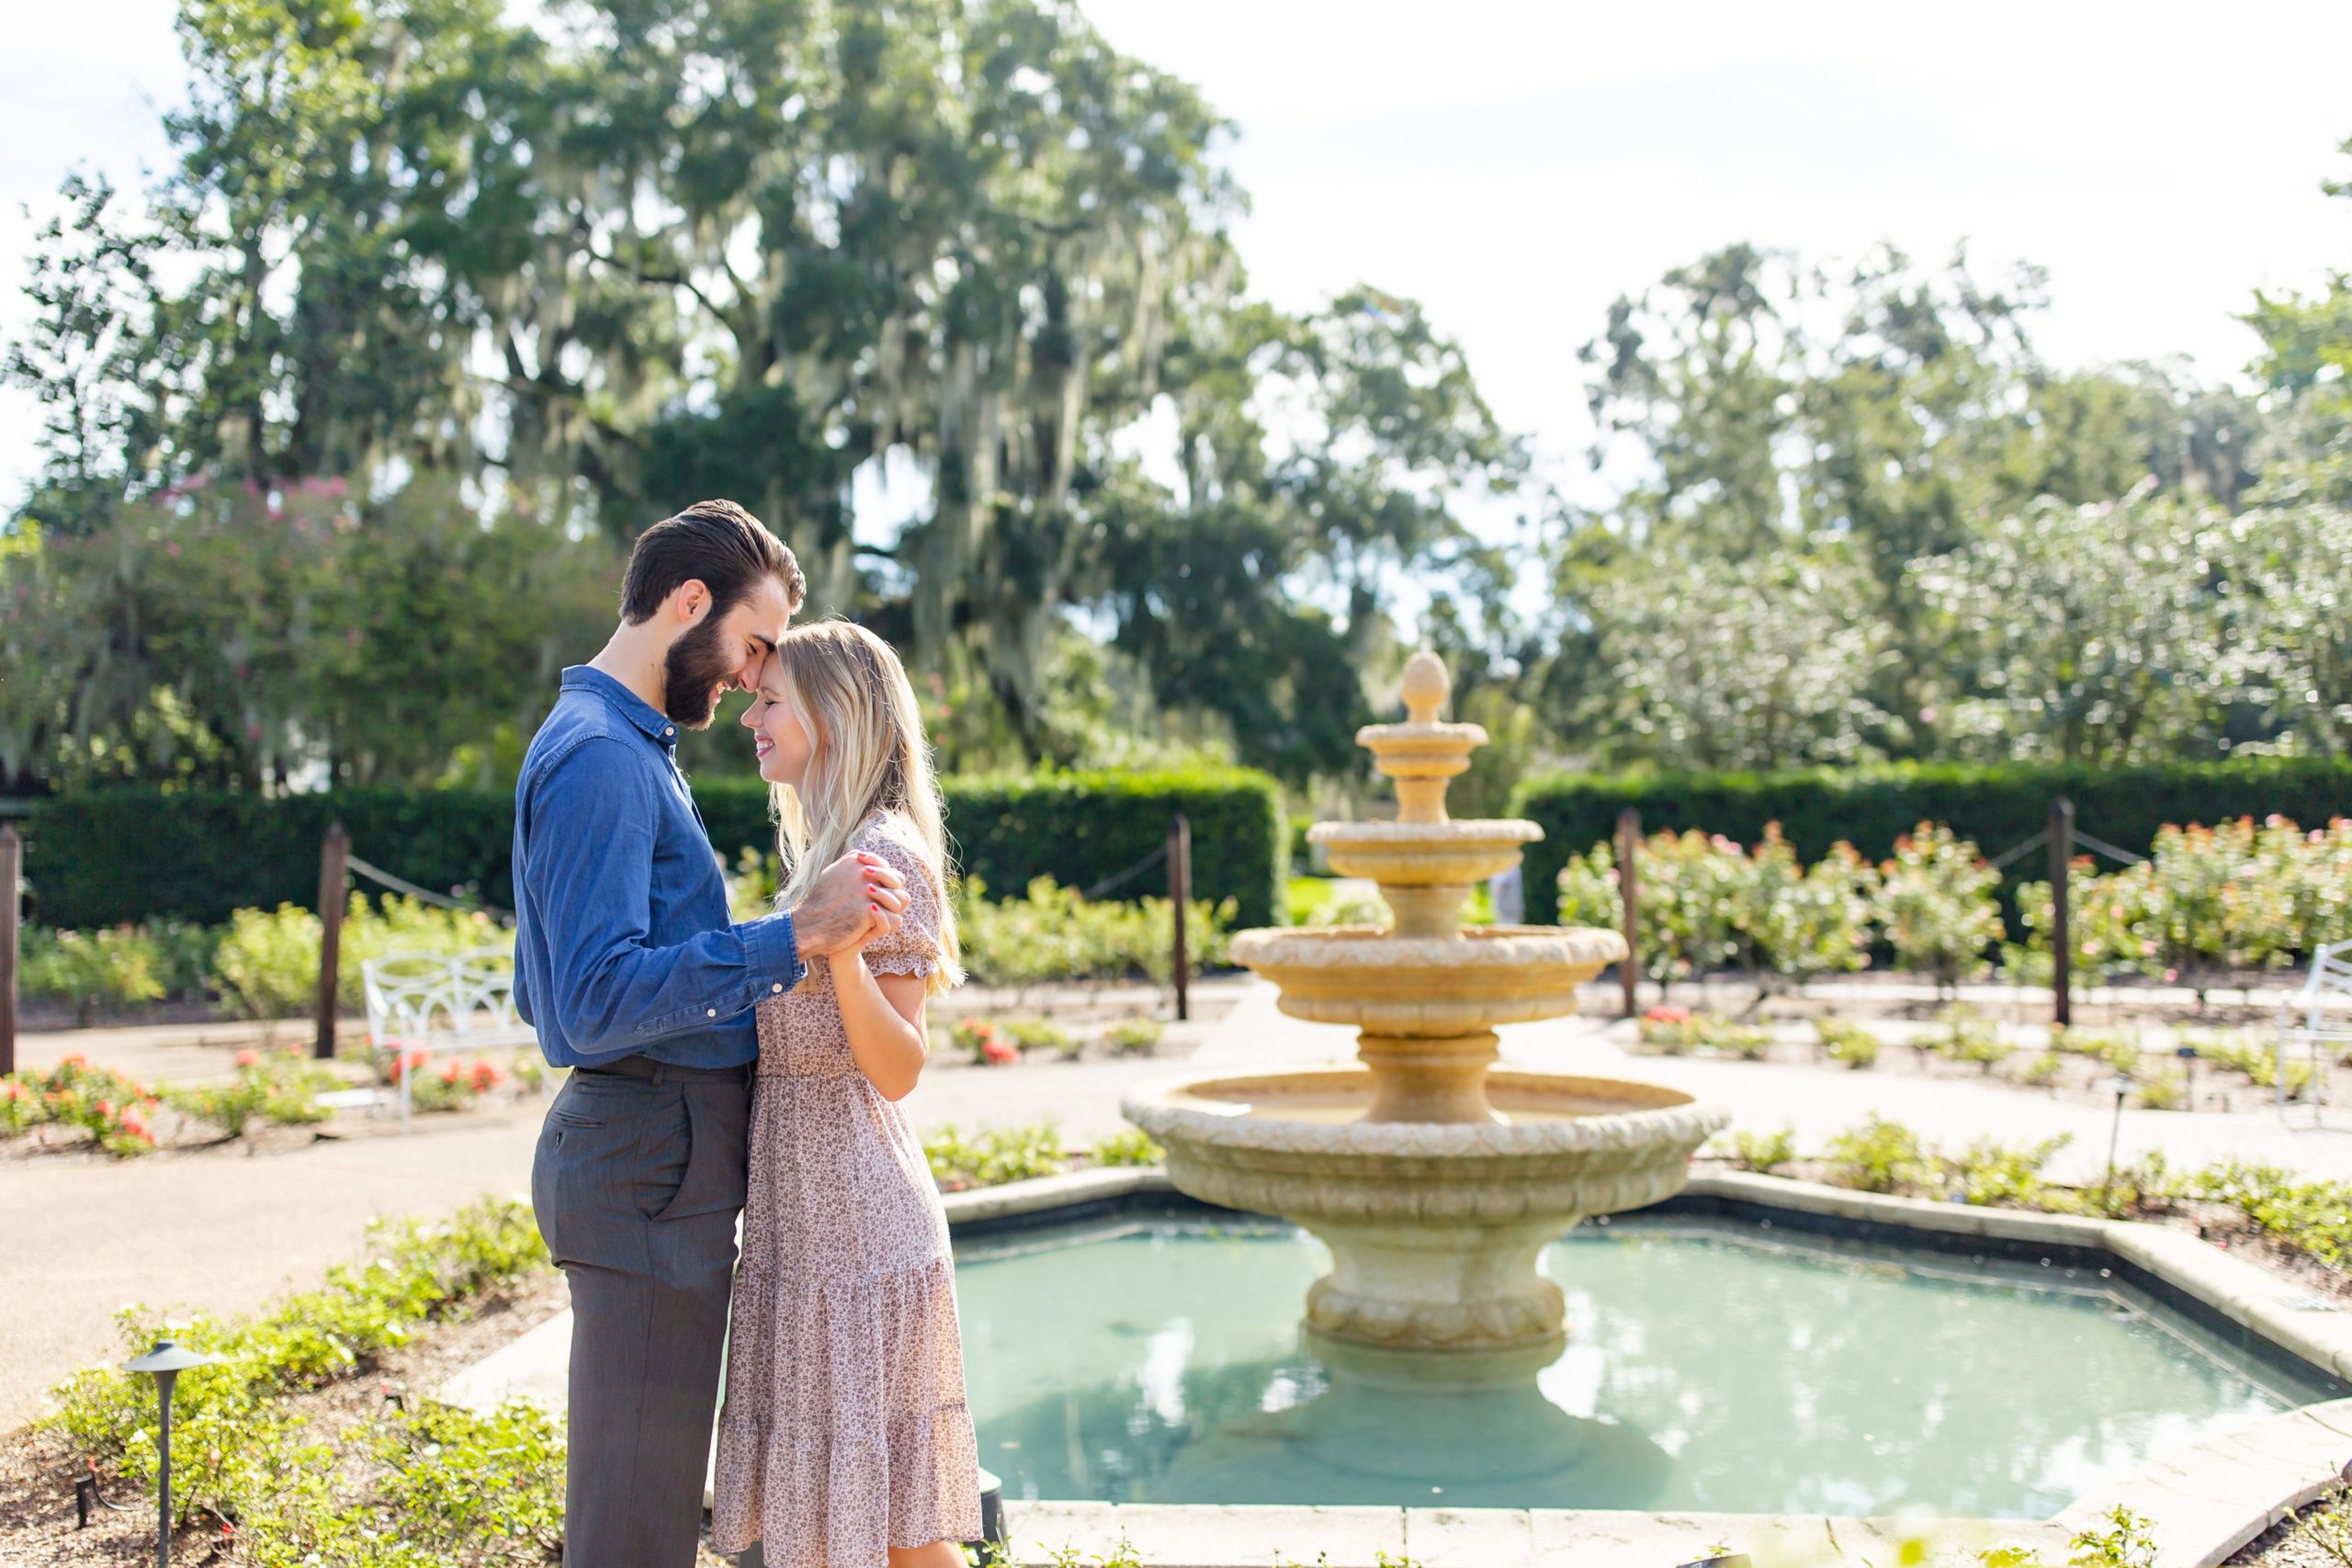 Leu Gardens Engagement Photos in Orlando, FL — Couple standing in front of fountain in rose garden